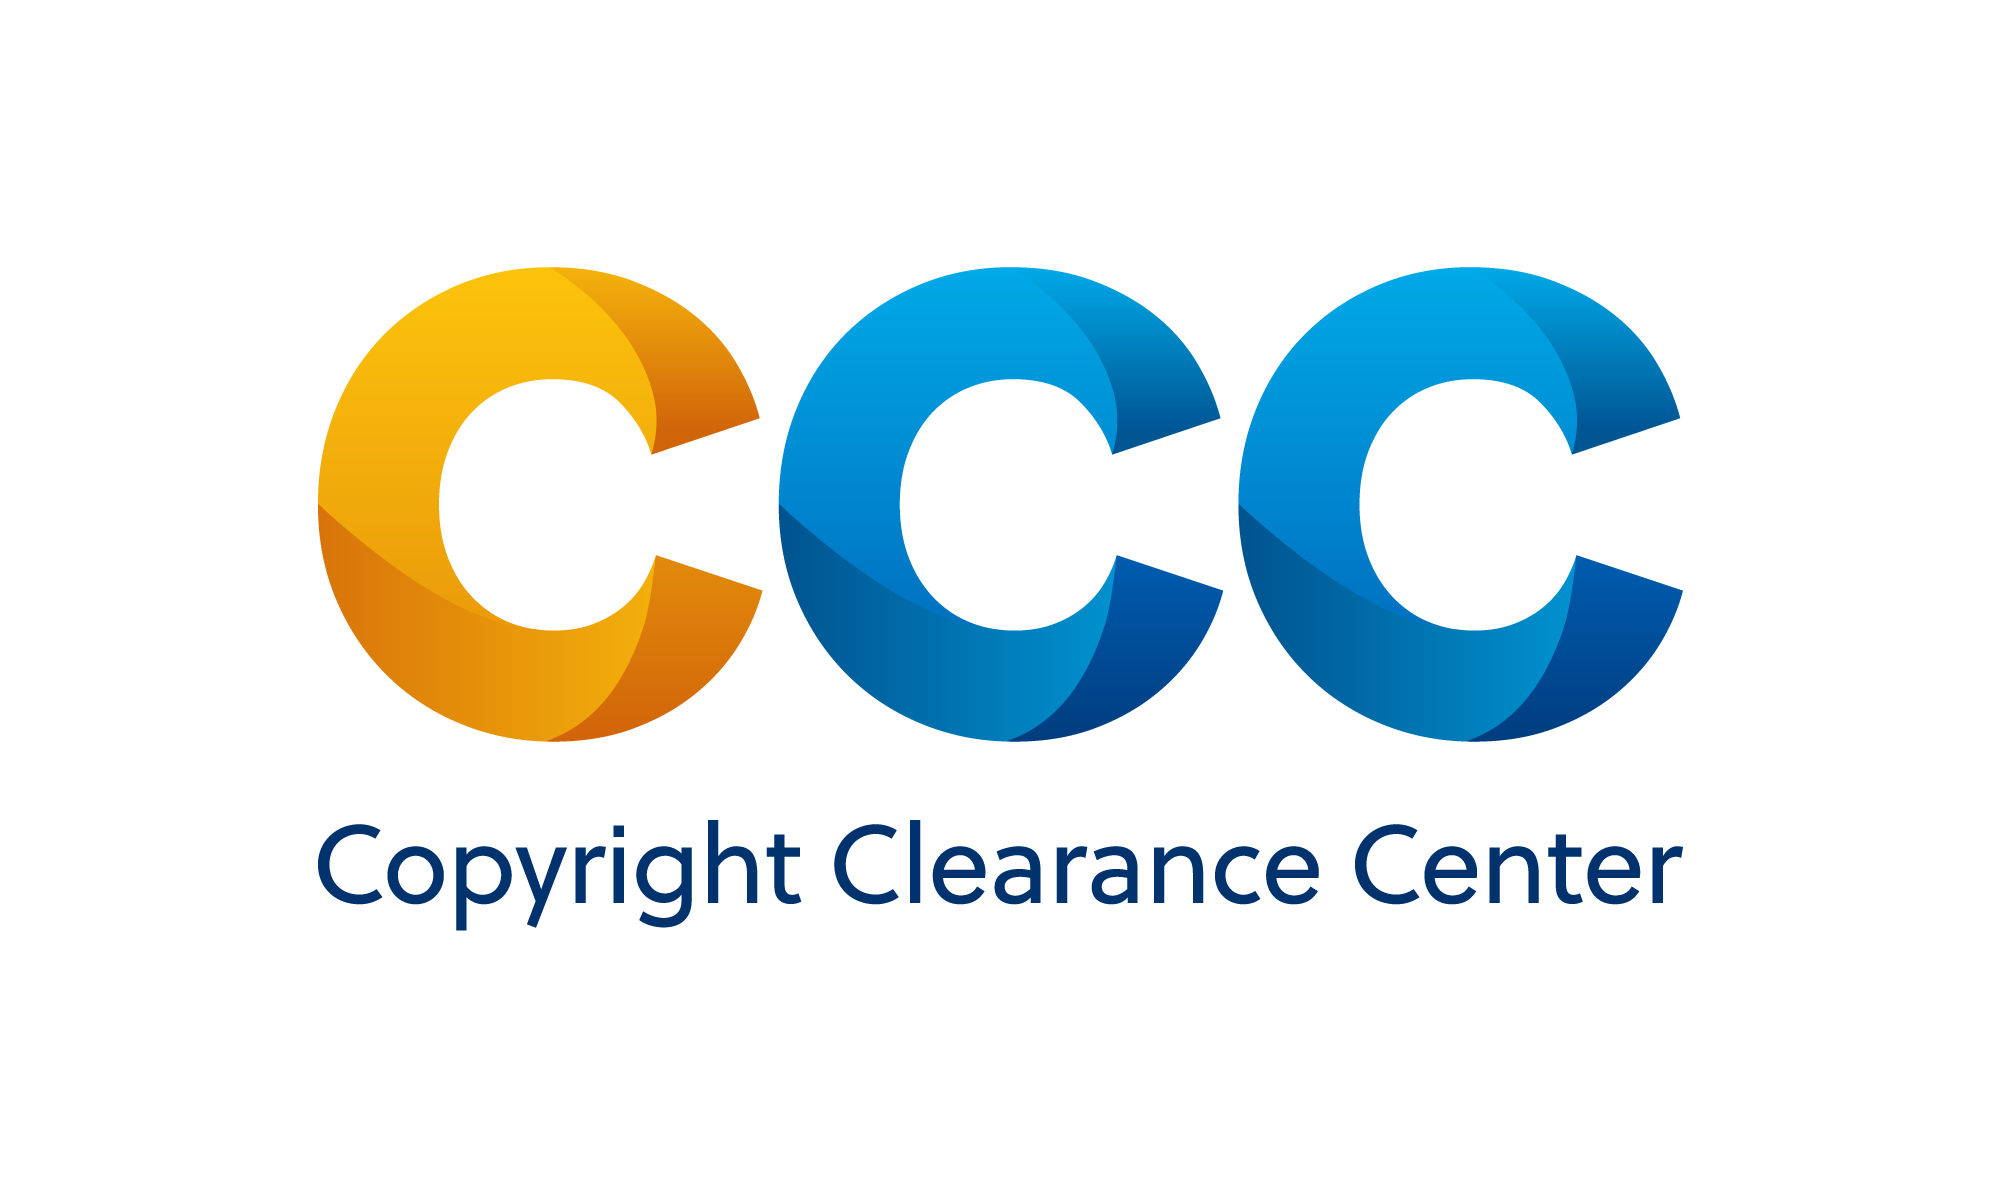 Copyright Clearance Center Company Logo